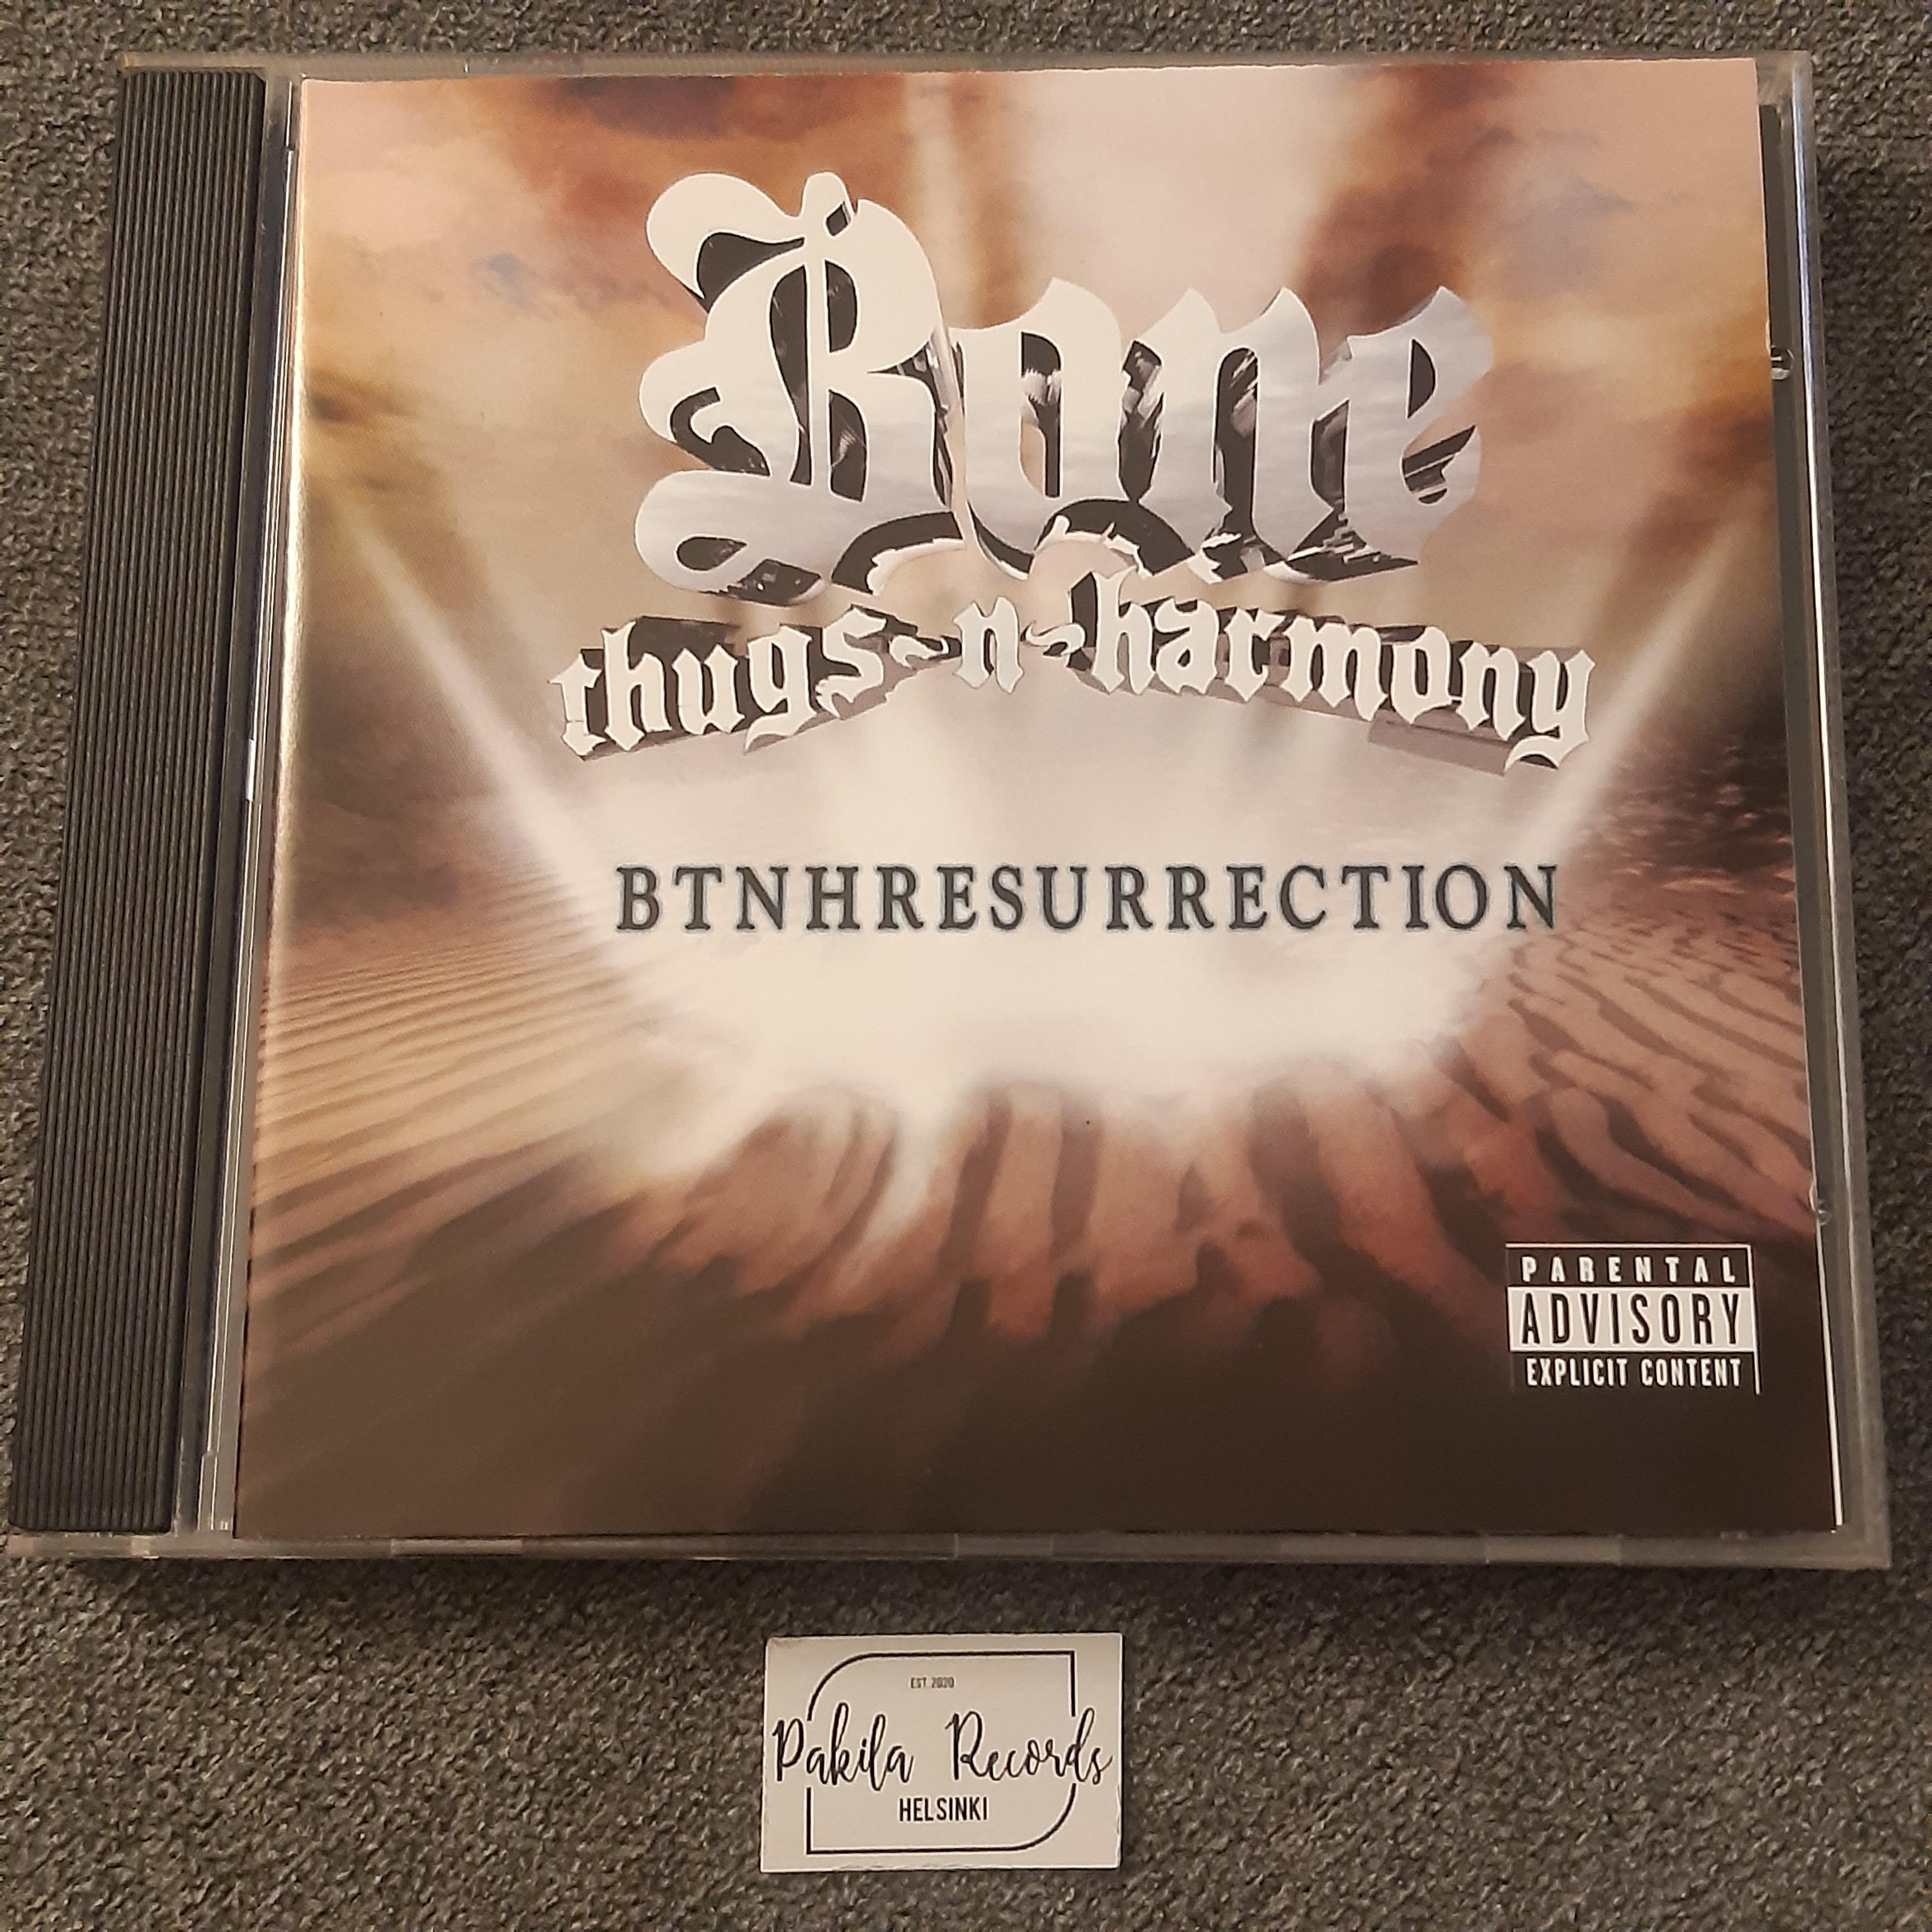 Bone Thugs-N-Harmony - Btnhresurrection - CD (käytetty)